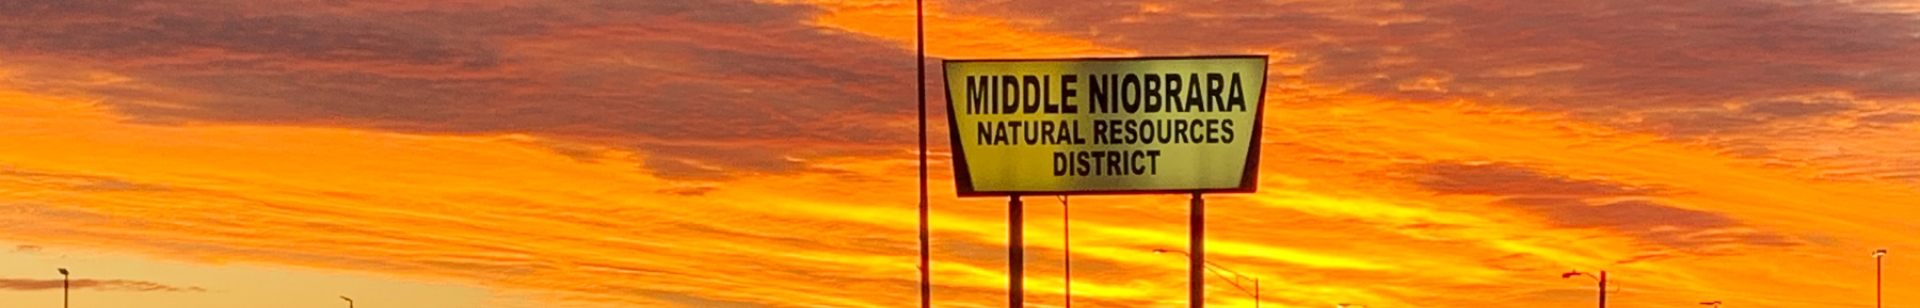 Middle Niobrara NRD Office at Sunrise